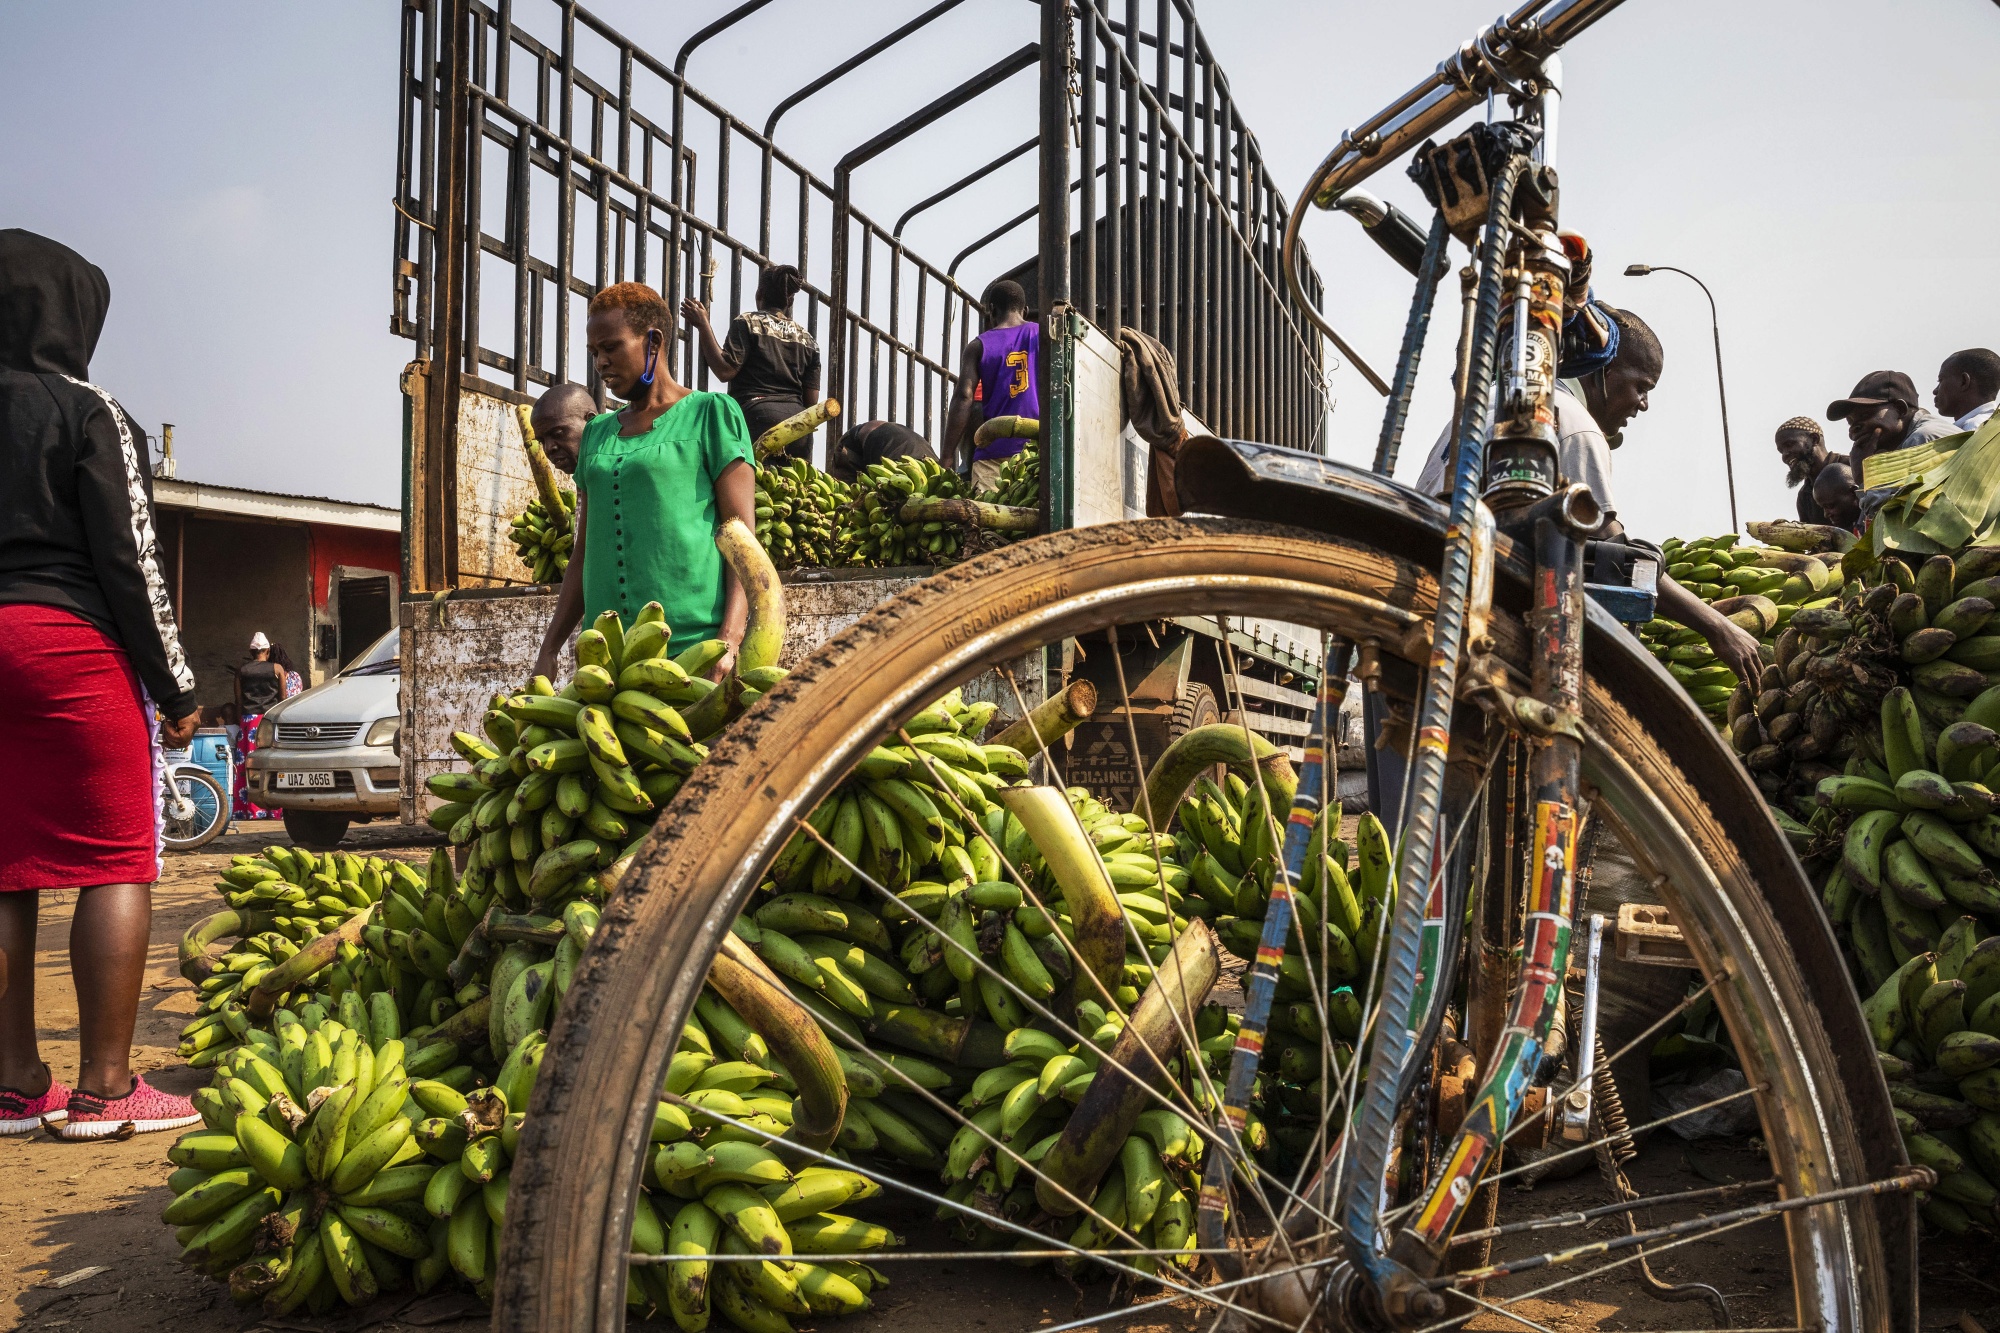 Vendors of&nbsp;matooke, or&nbsp;East African Highland bananas, offload&nbsp;a delivery truck&nbsp;at&nbsp;Ggaba market in Kampala, Uganda on&nbsp;July 23, 2020.&nbsp;